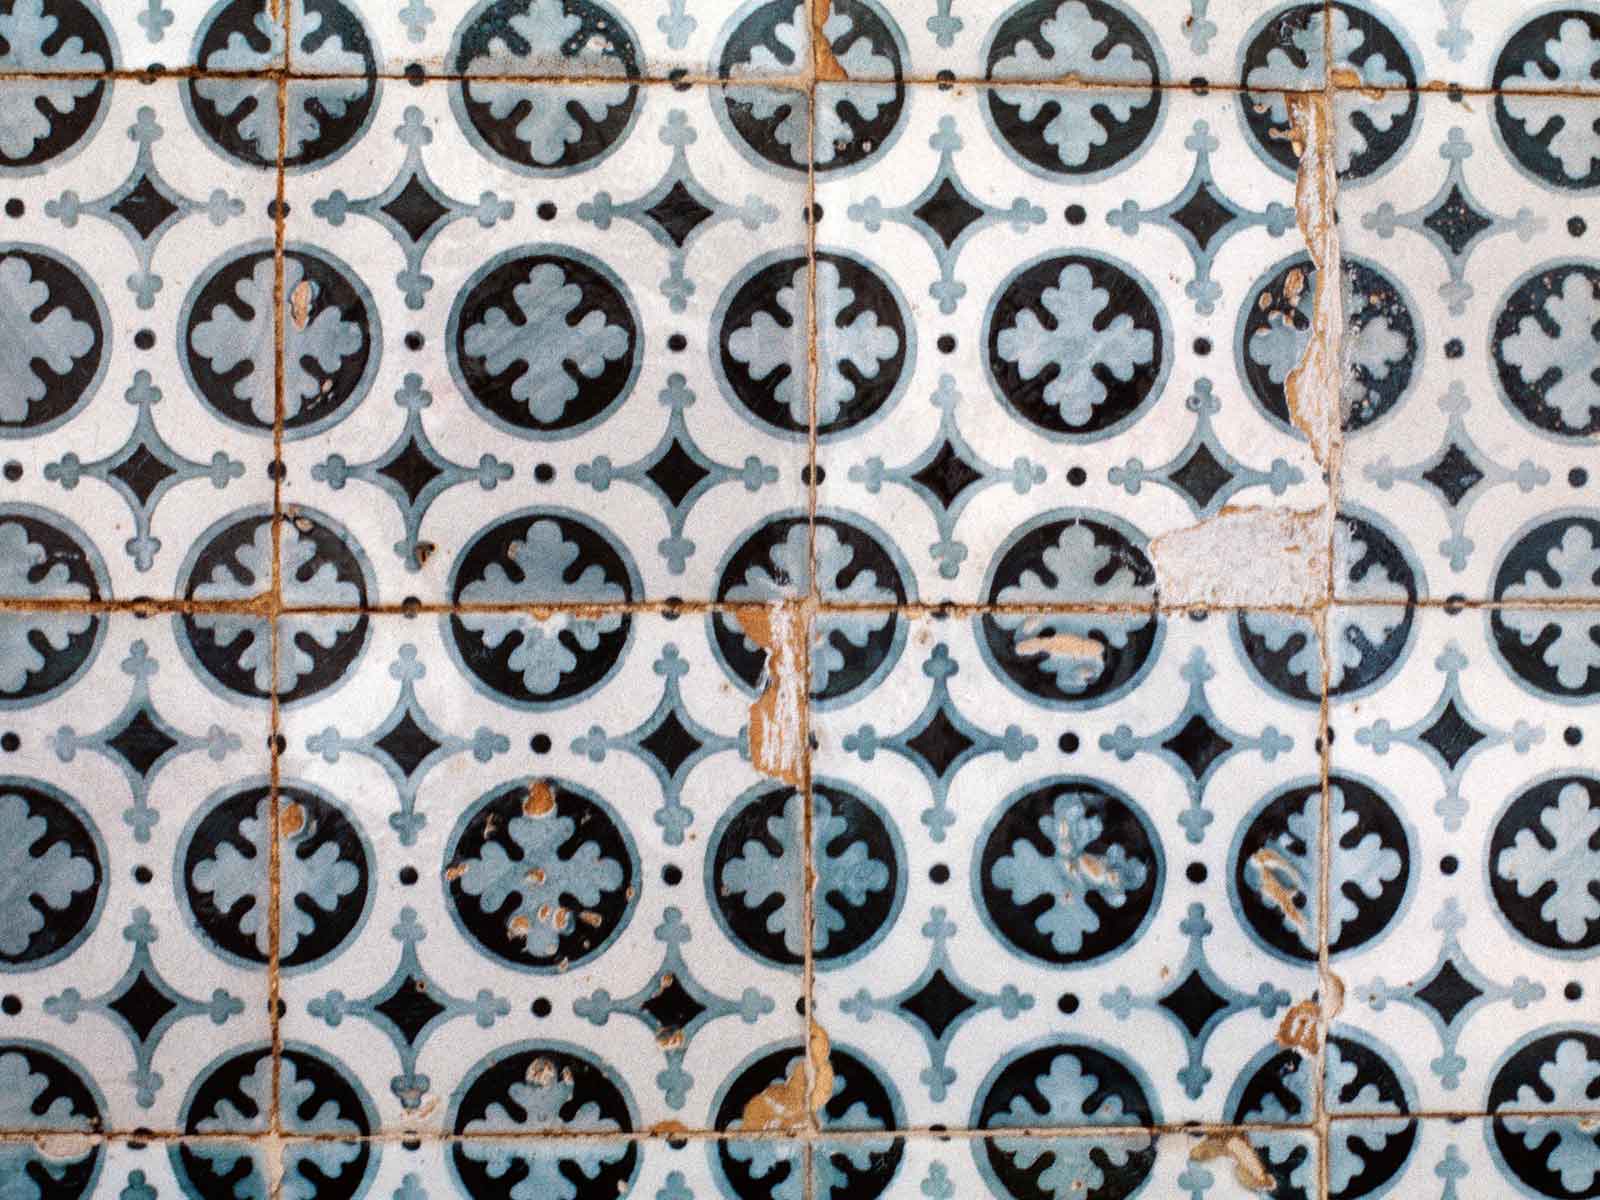 Lisbon's tiles